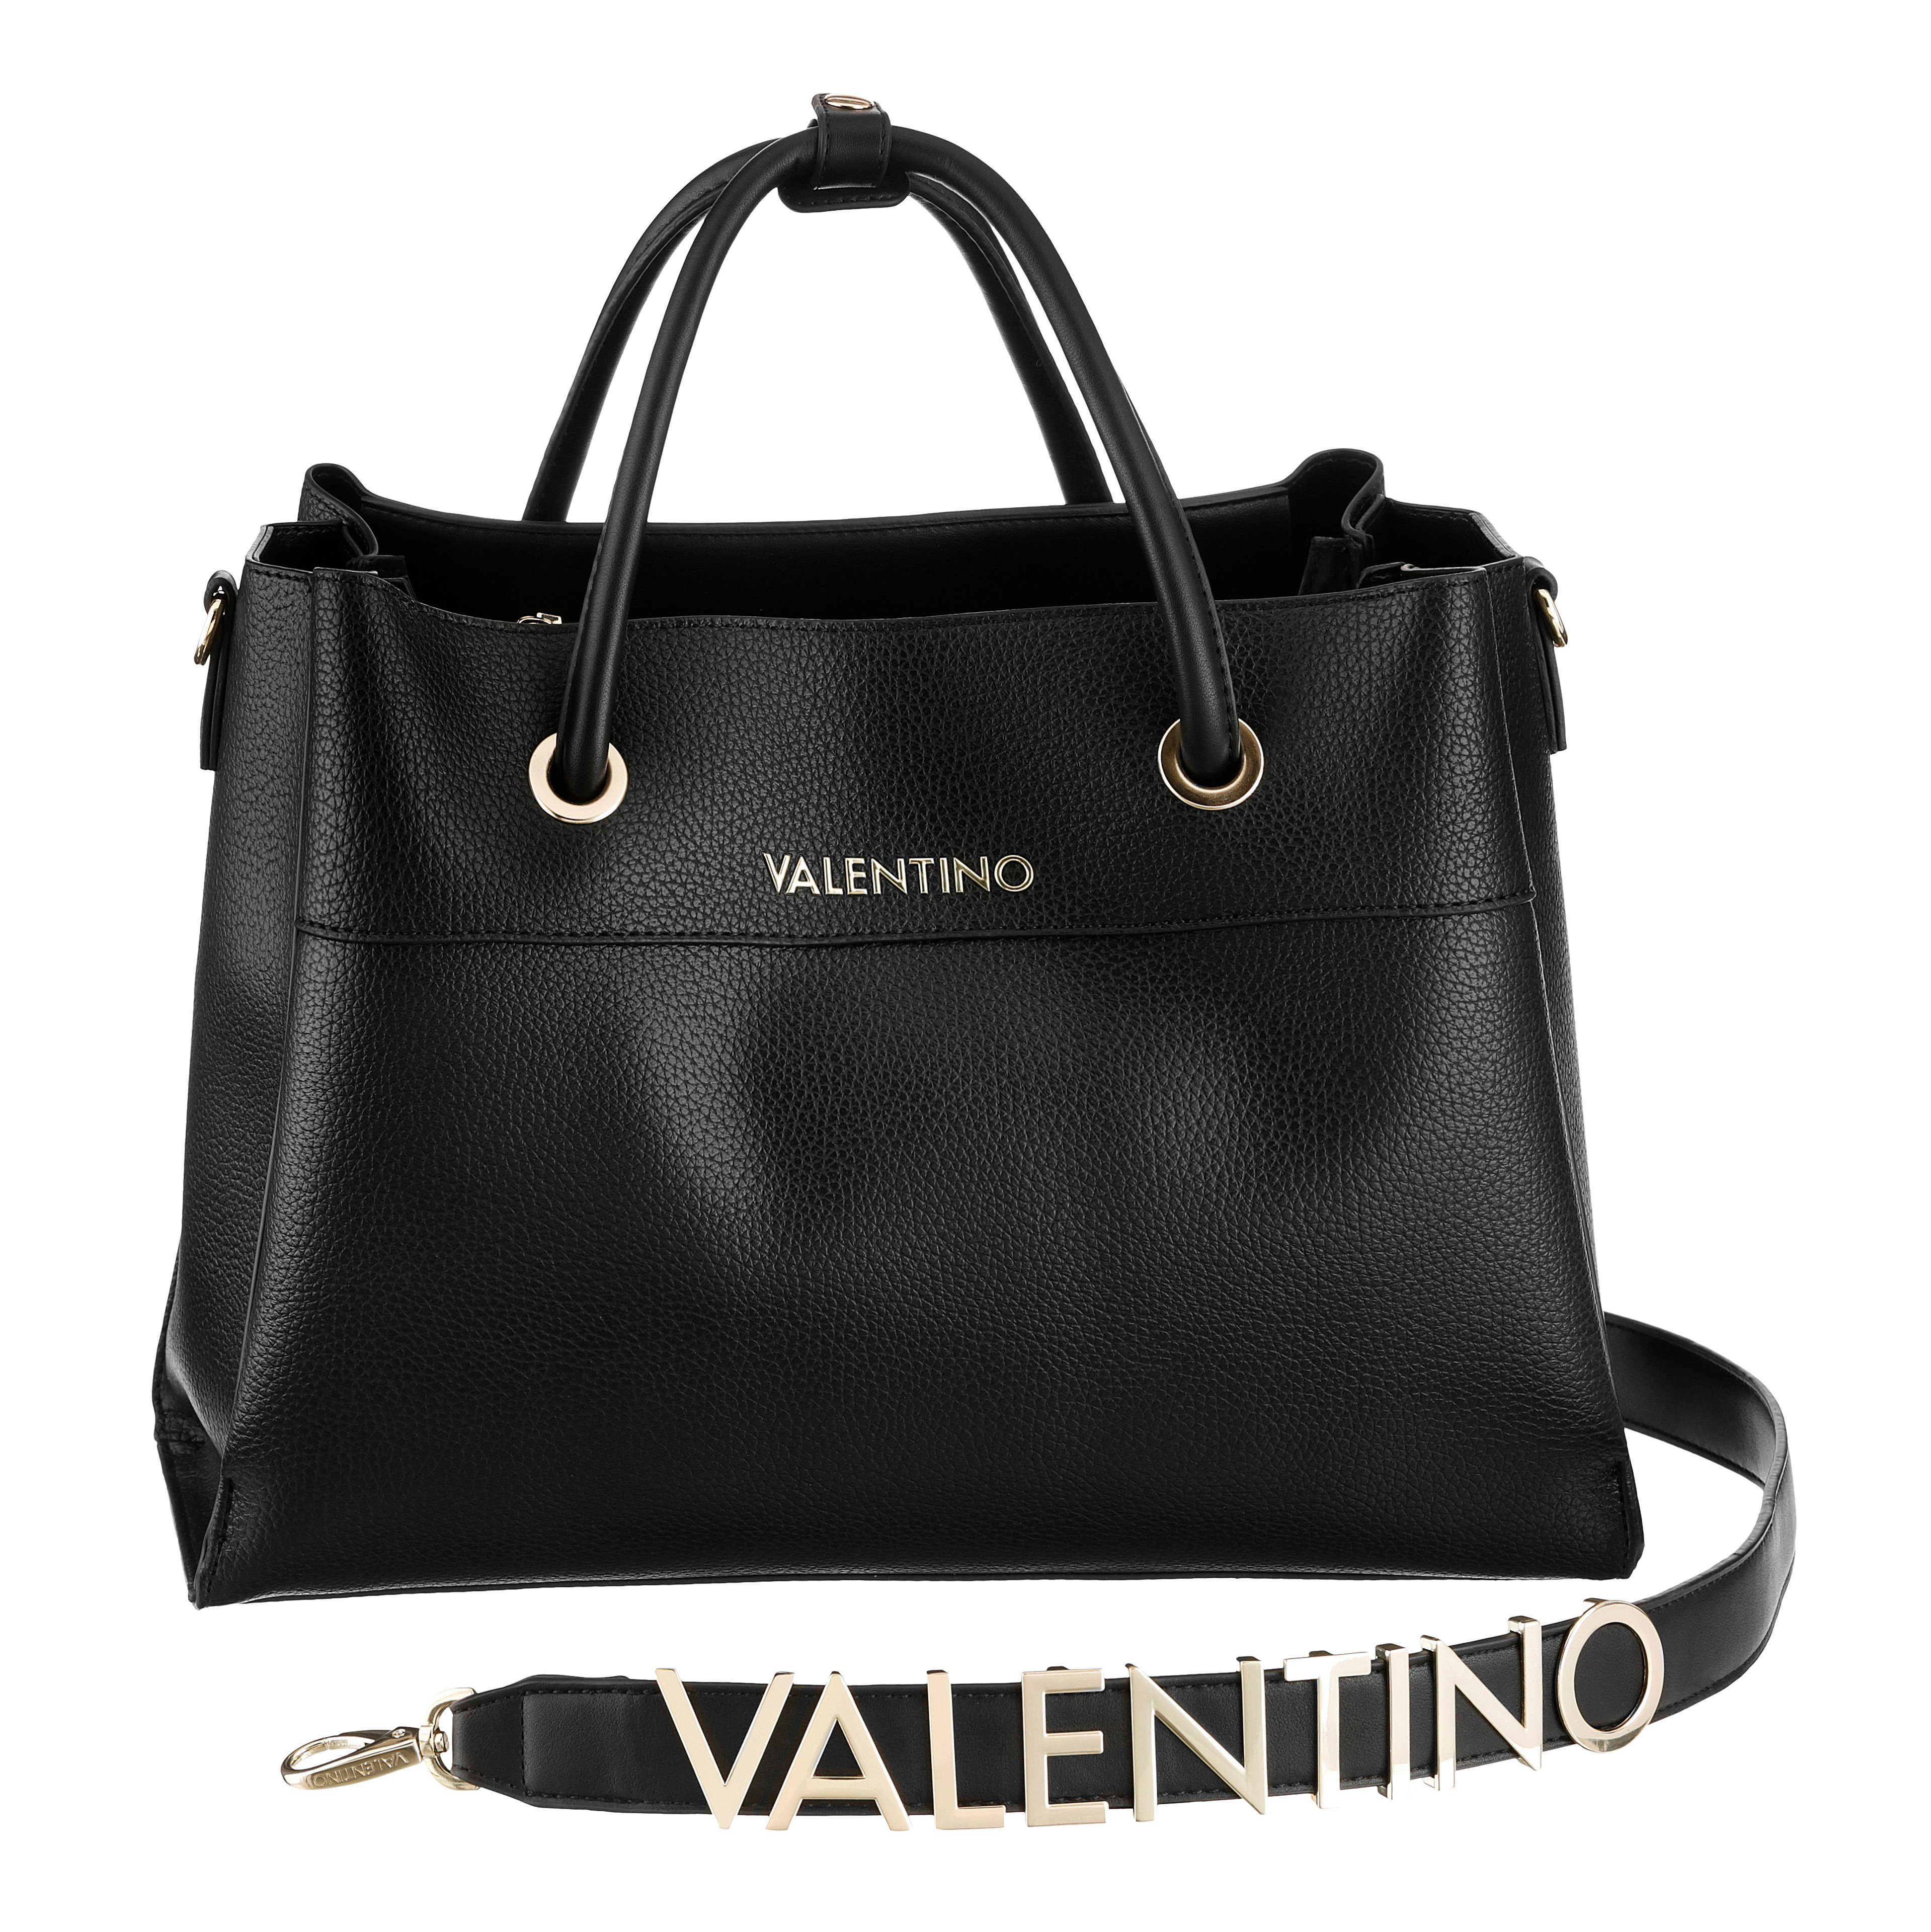 VALENTINO BAGS Handtasche »Alexia Tote 802«, Shopper